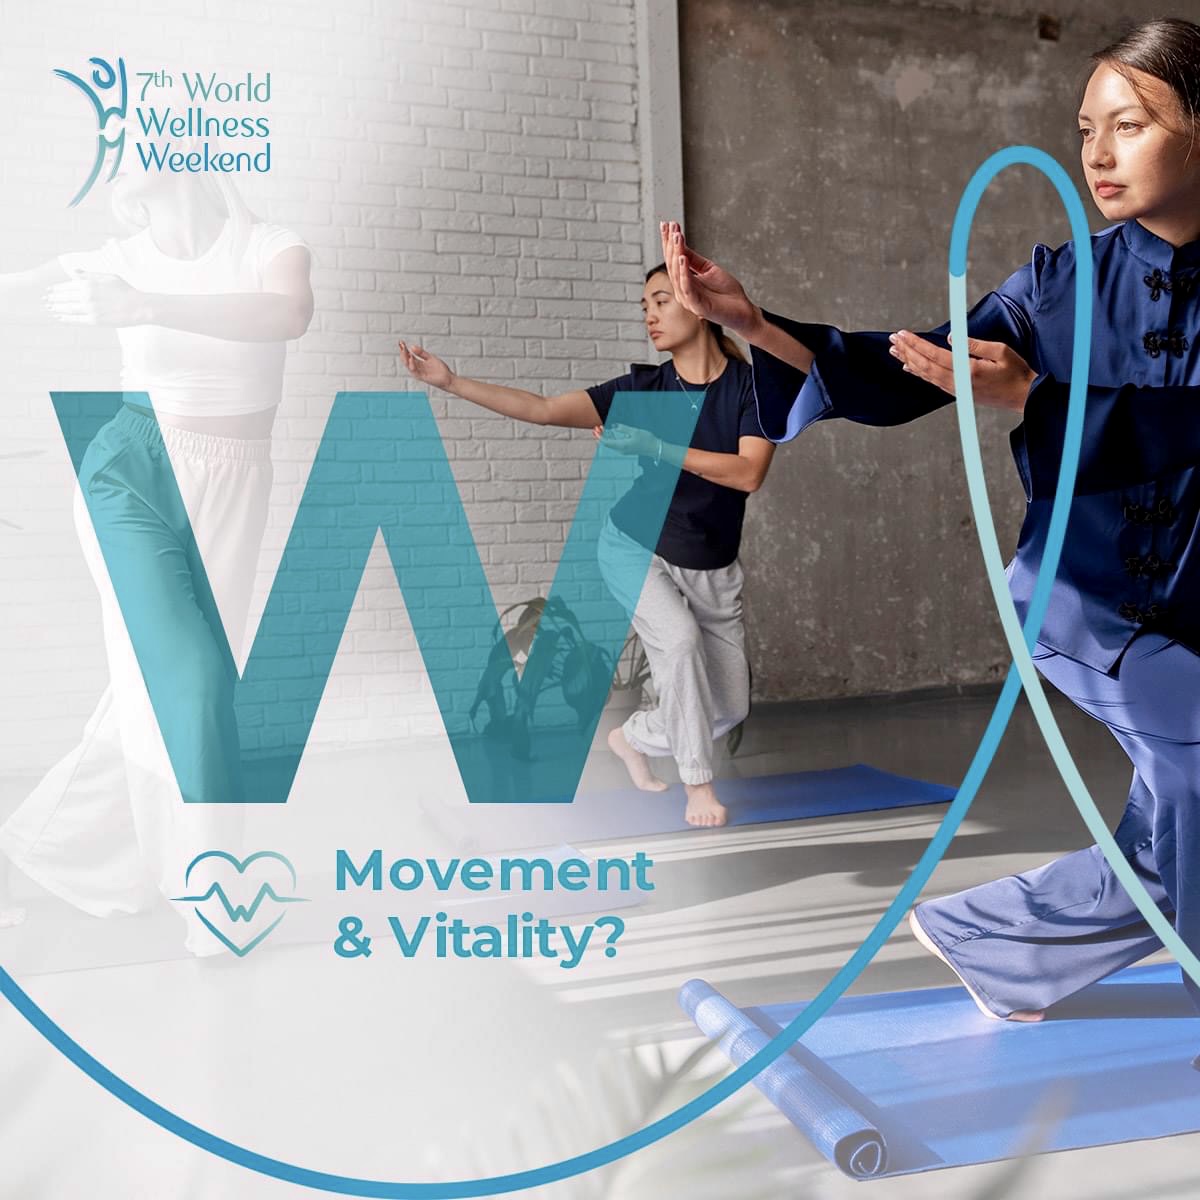 World Wellness Weekend Coming to Hungary on Sep 15-17